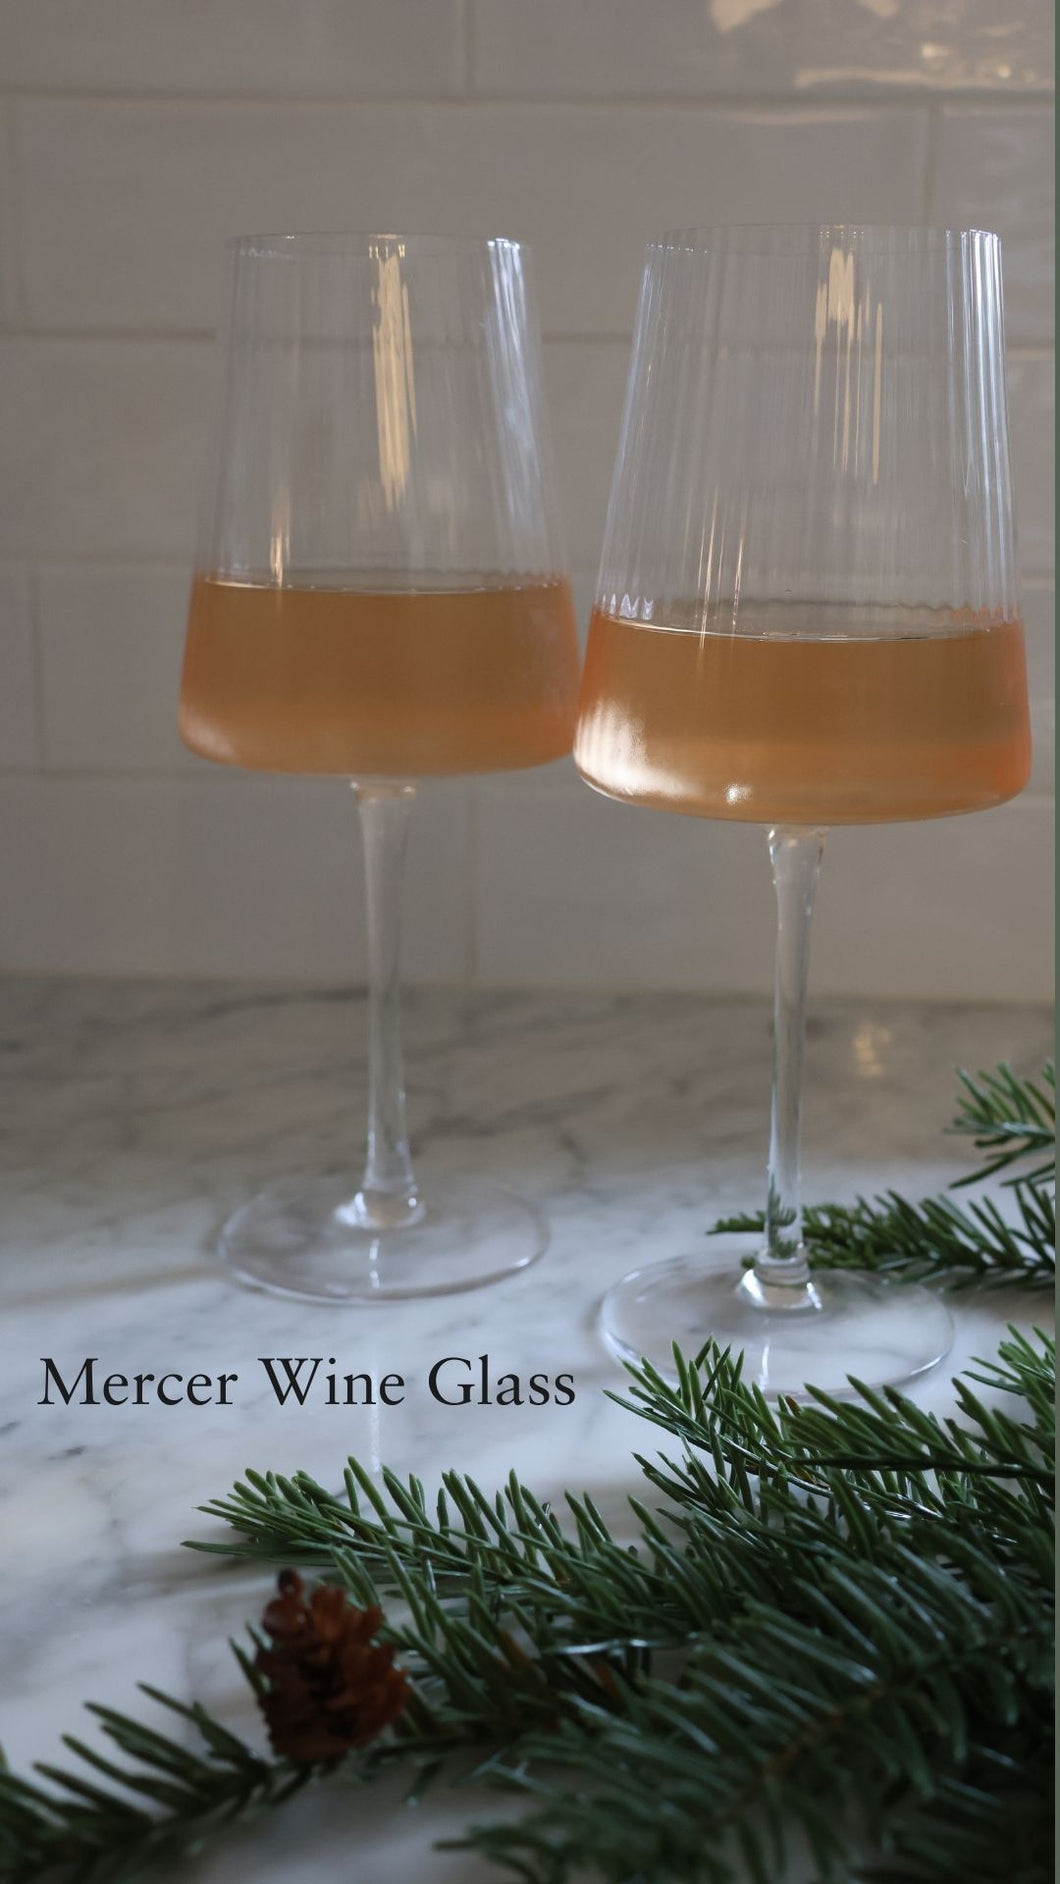 Mercer Wine Glass